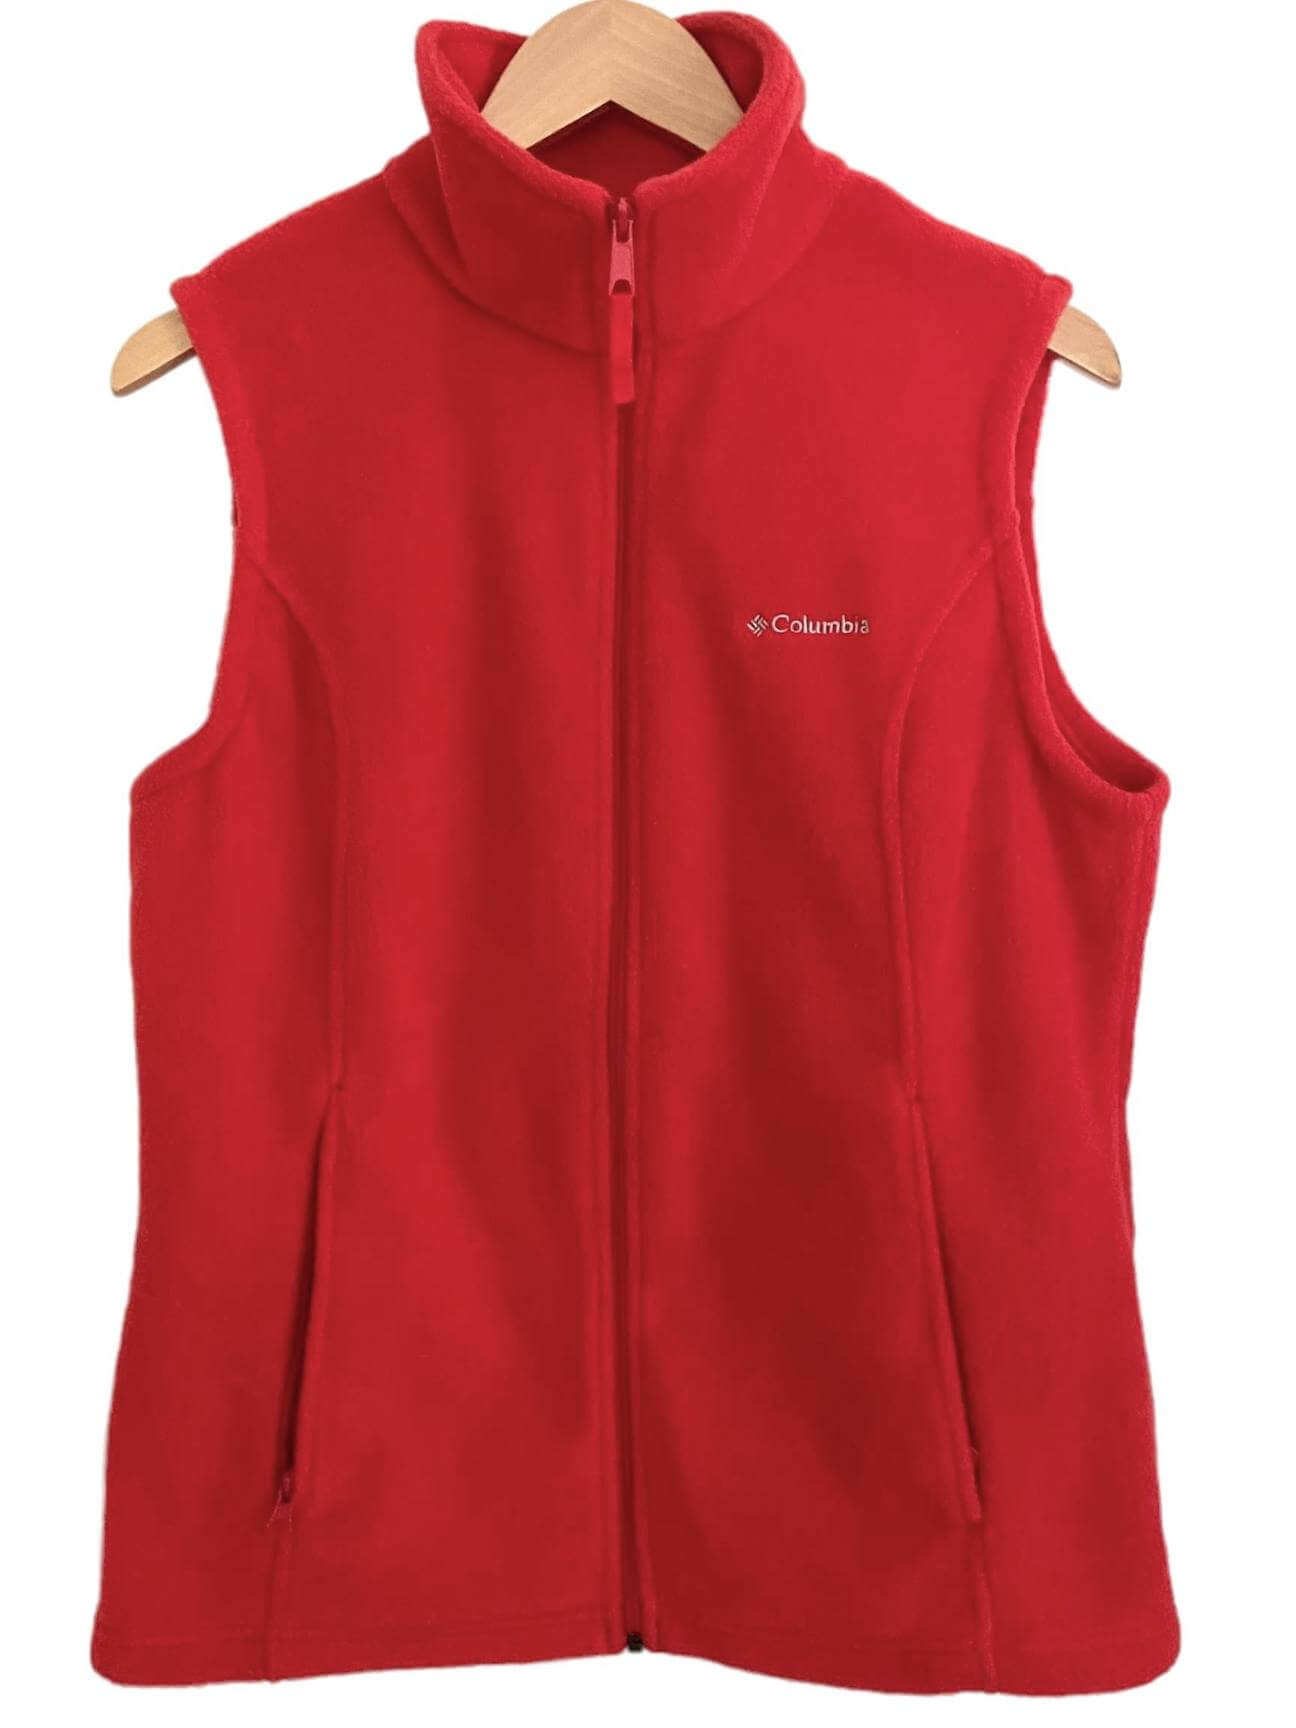 Warm Spring Red Fleece Vest